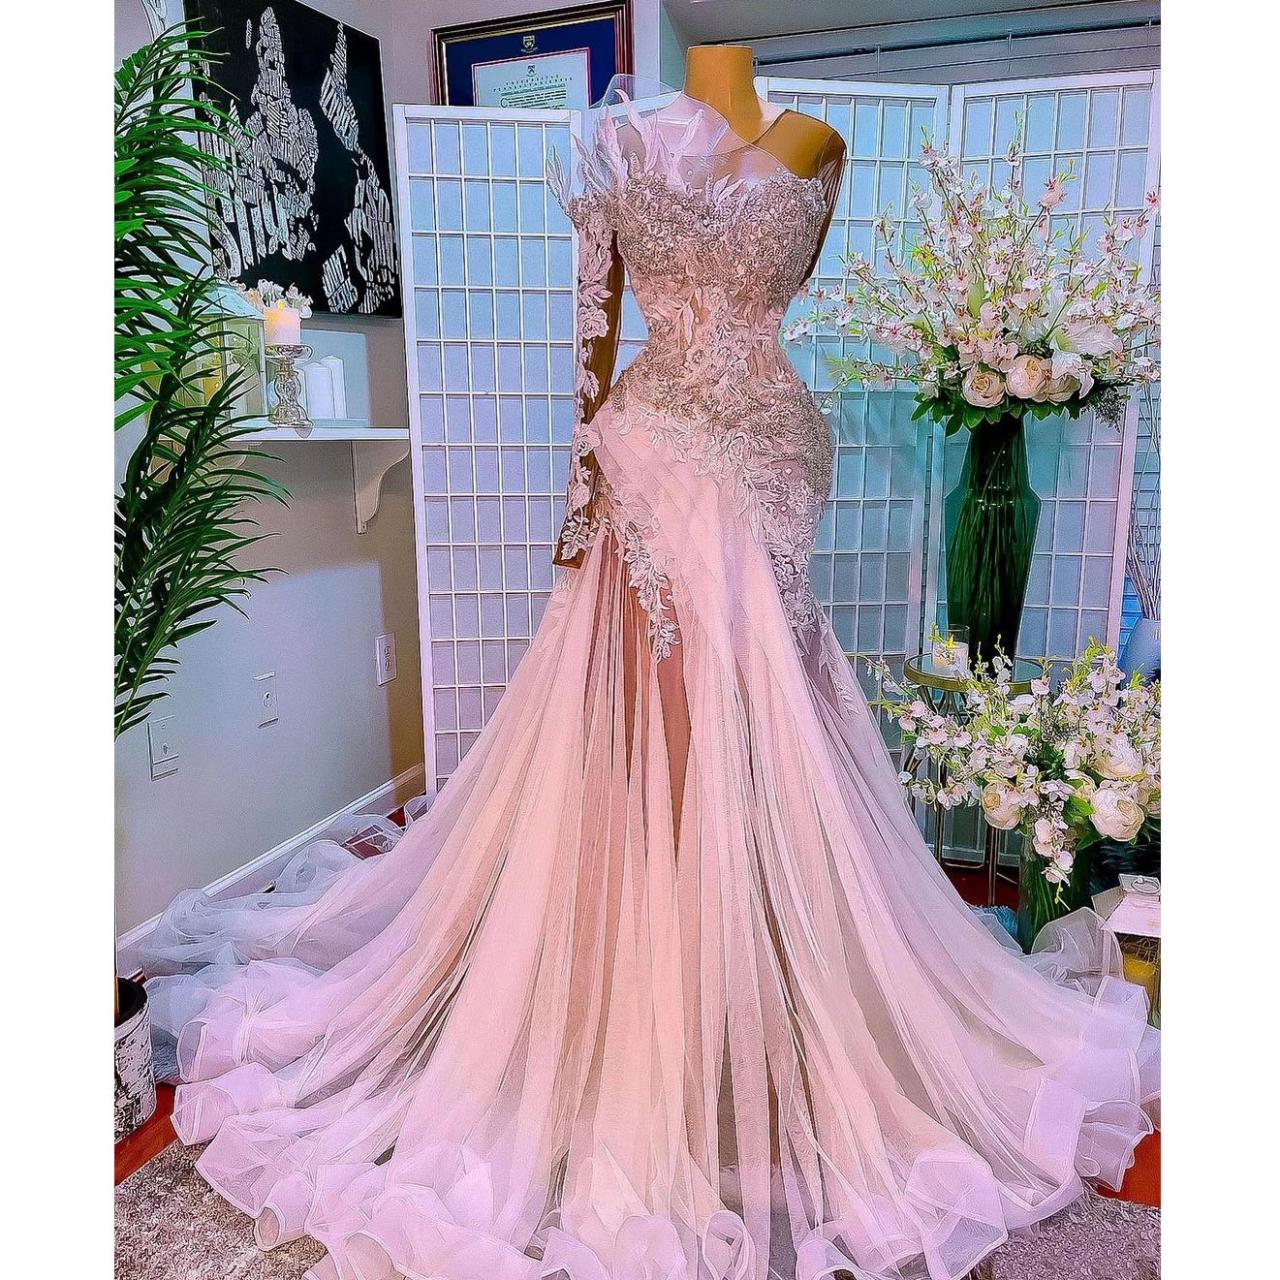 Lace Prom Dresses, 2020 Prom Dresses, Mermaid Evening Dress, Custom Make Evening Dresses, Fashion Party Dresses, Arabic Evening Dresses,